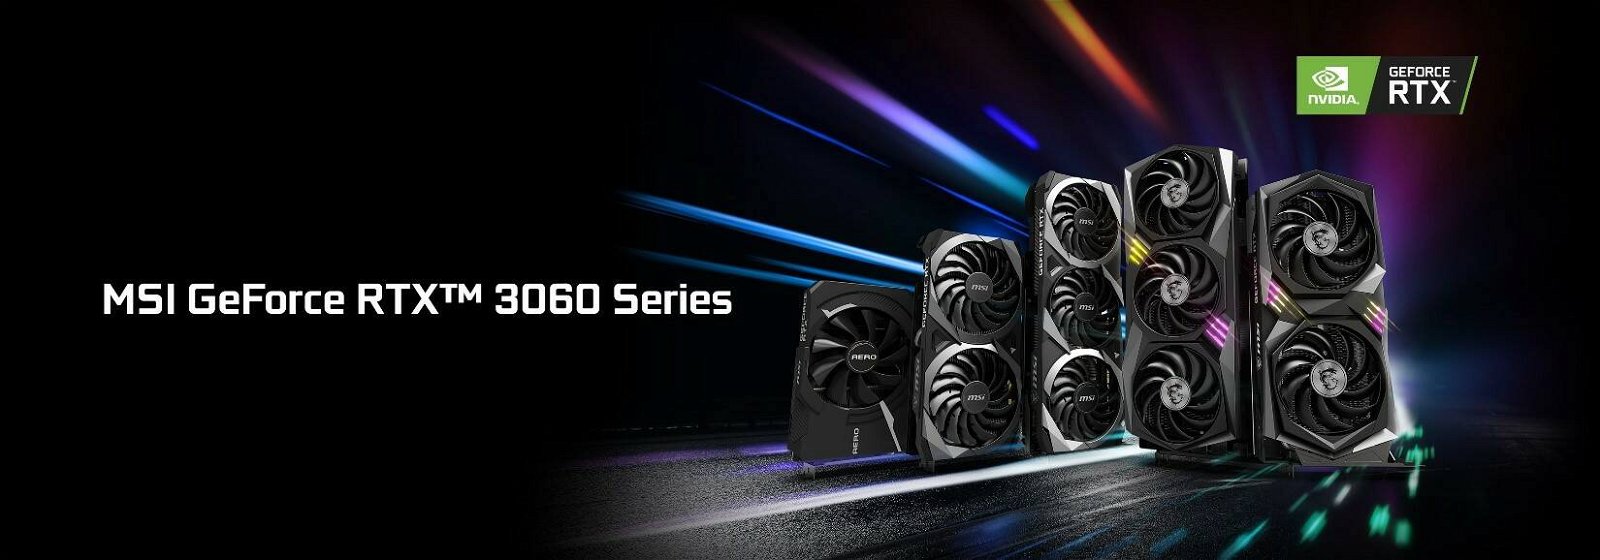 Immagine di MSI ha annunciato varianti di GeForce RTX 3060 per tutti i gusti